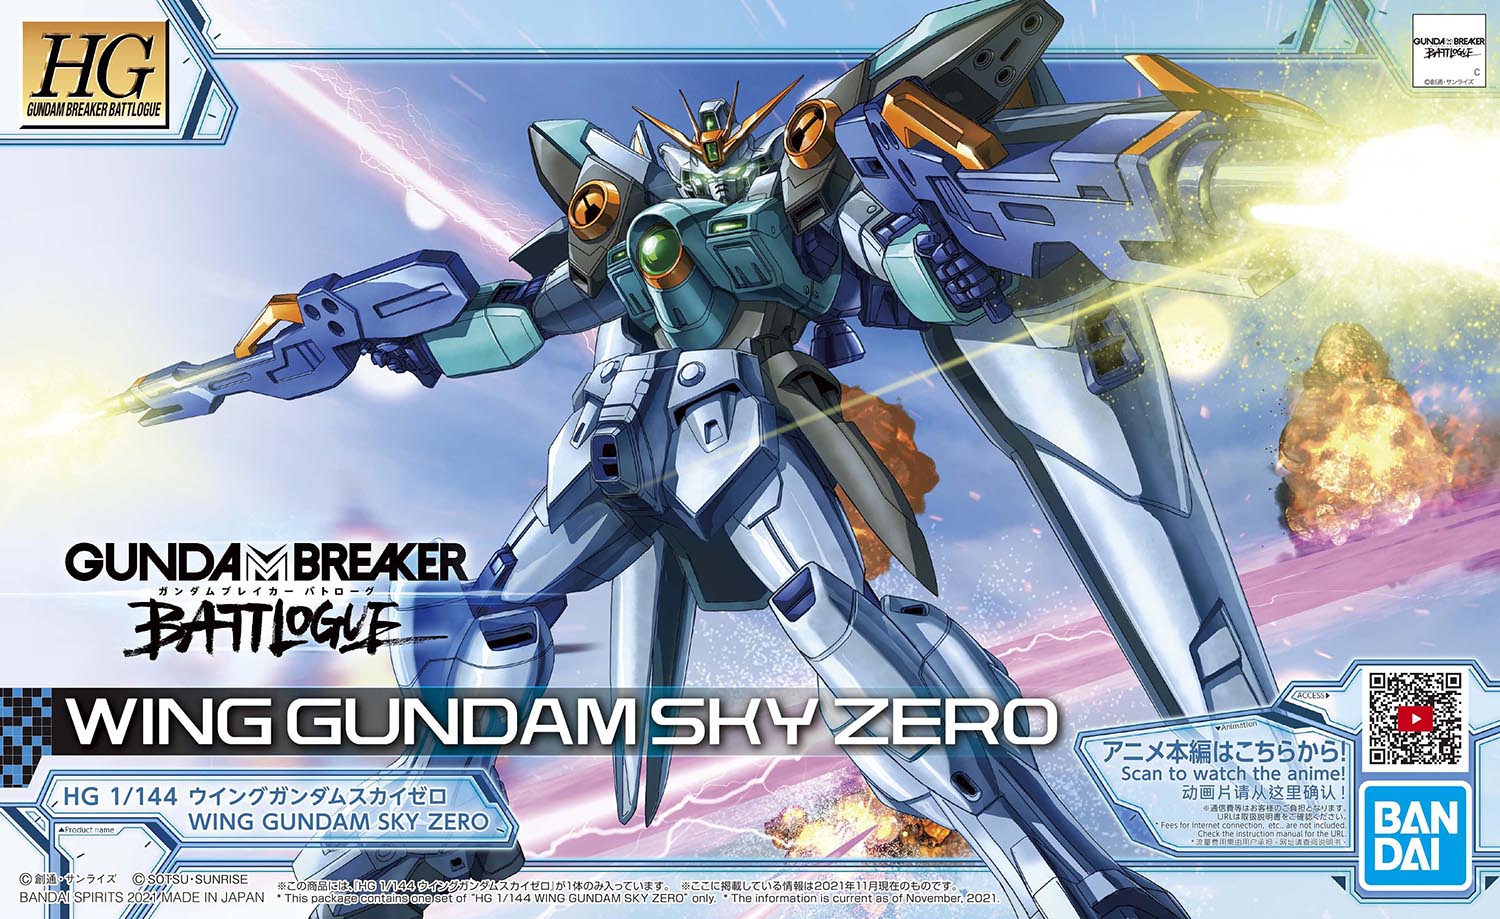 HG Wing Gundam Sky Zero "Gundam Breaker Battlogue"